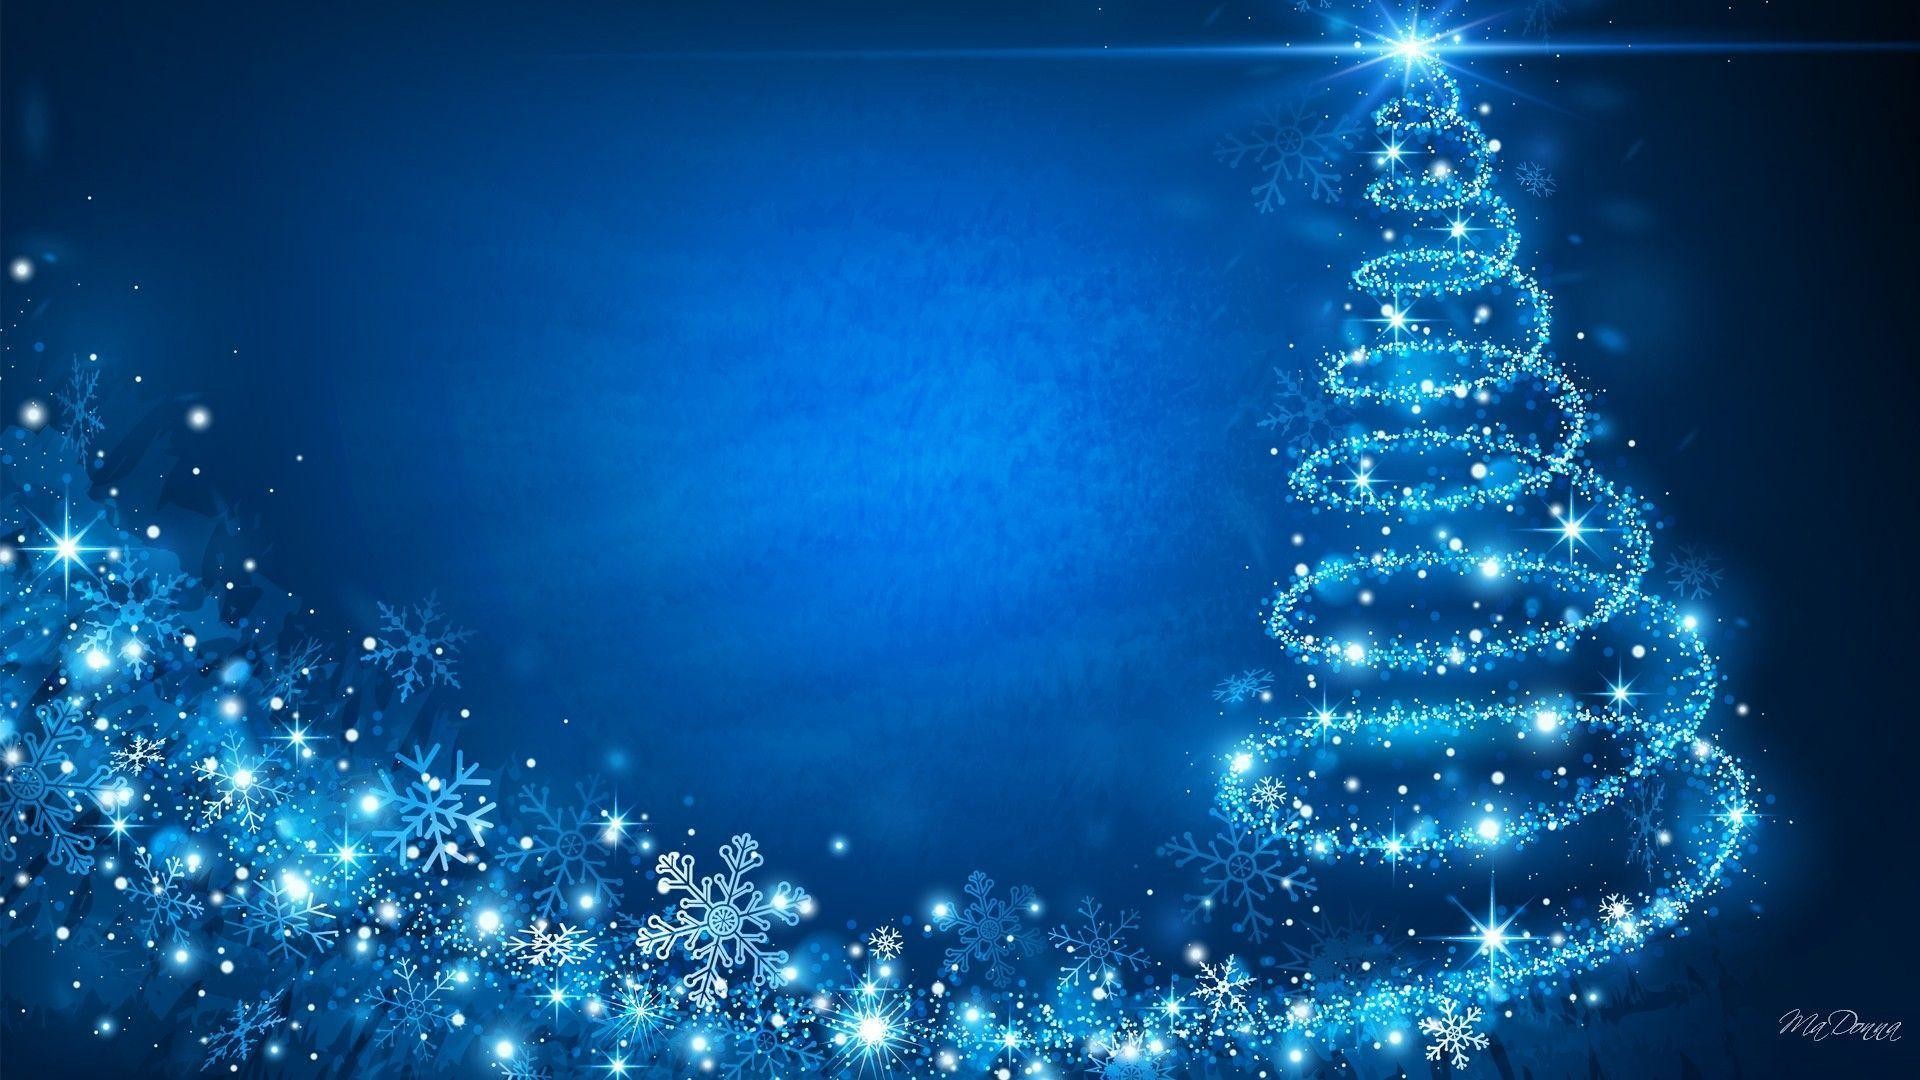 Silver and Blue Christmas Background  Fond de noël Noël bleu Décorations  noël argents